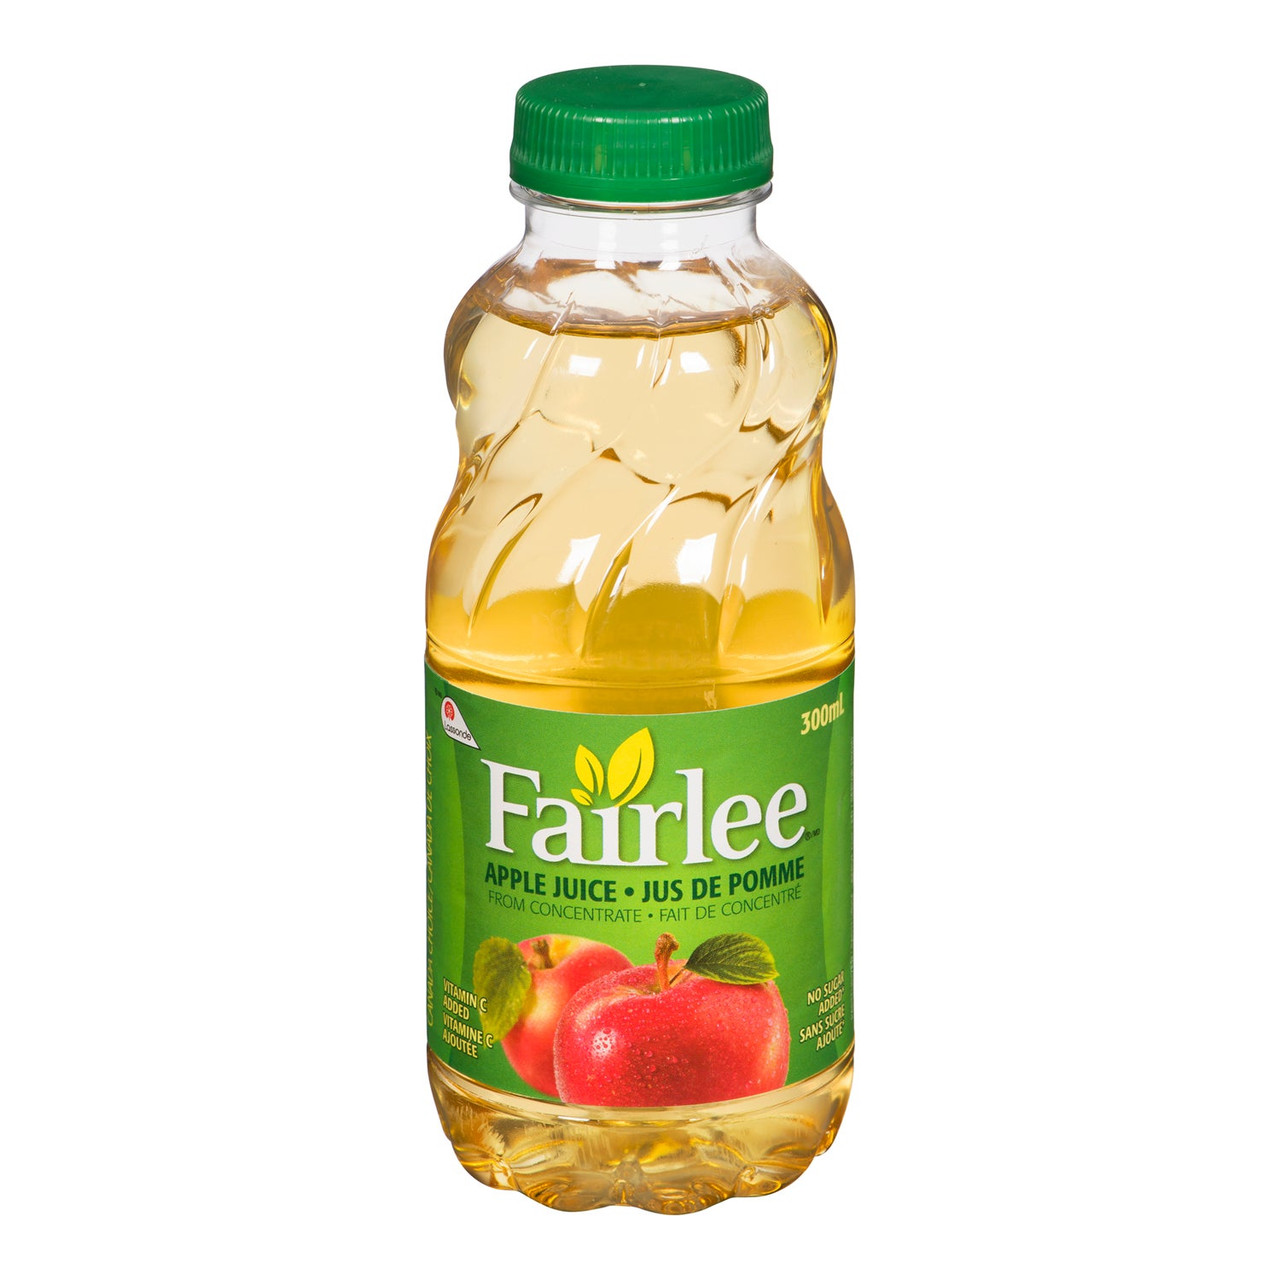 Fairlee Apple Juice, Polyethylene | 300ML/Unit, 24 Units/Case